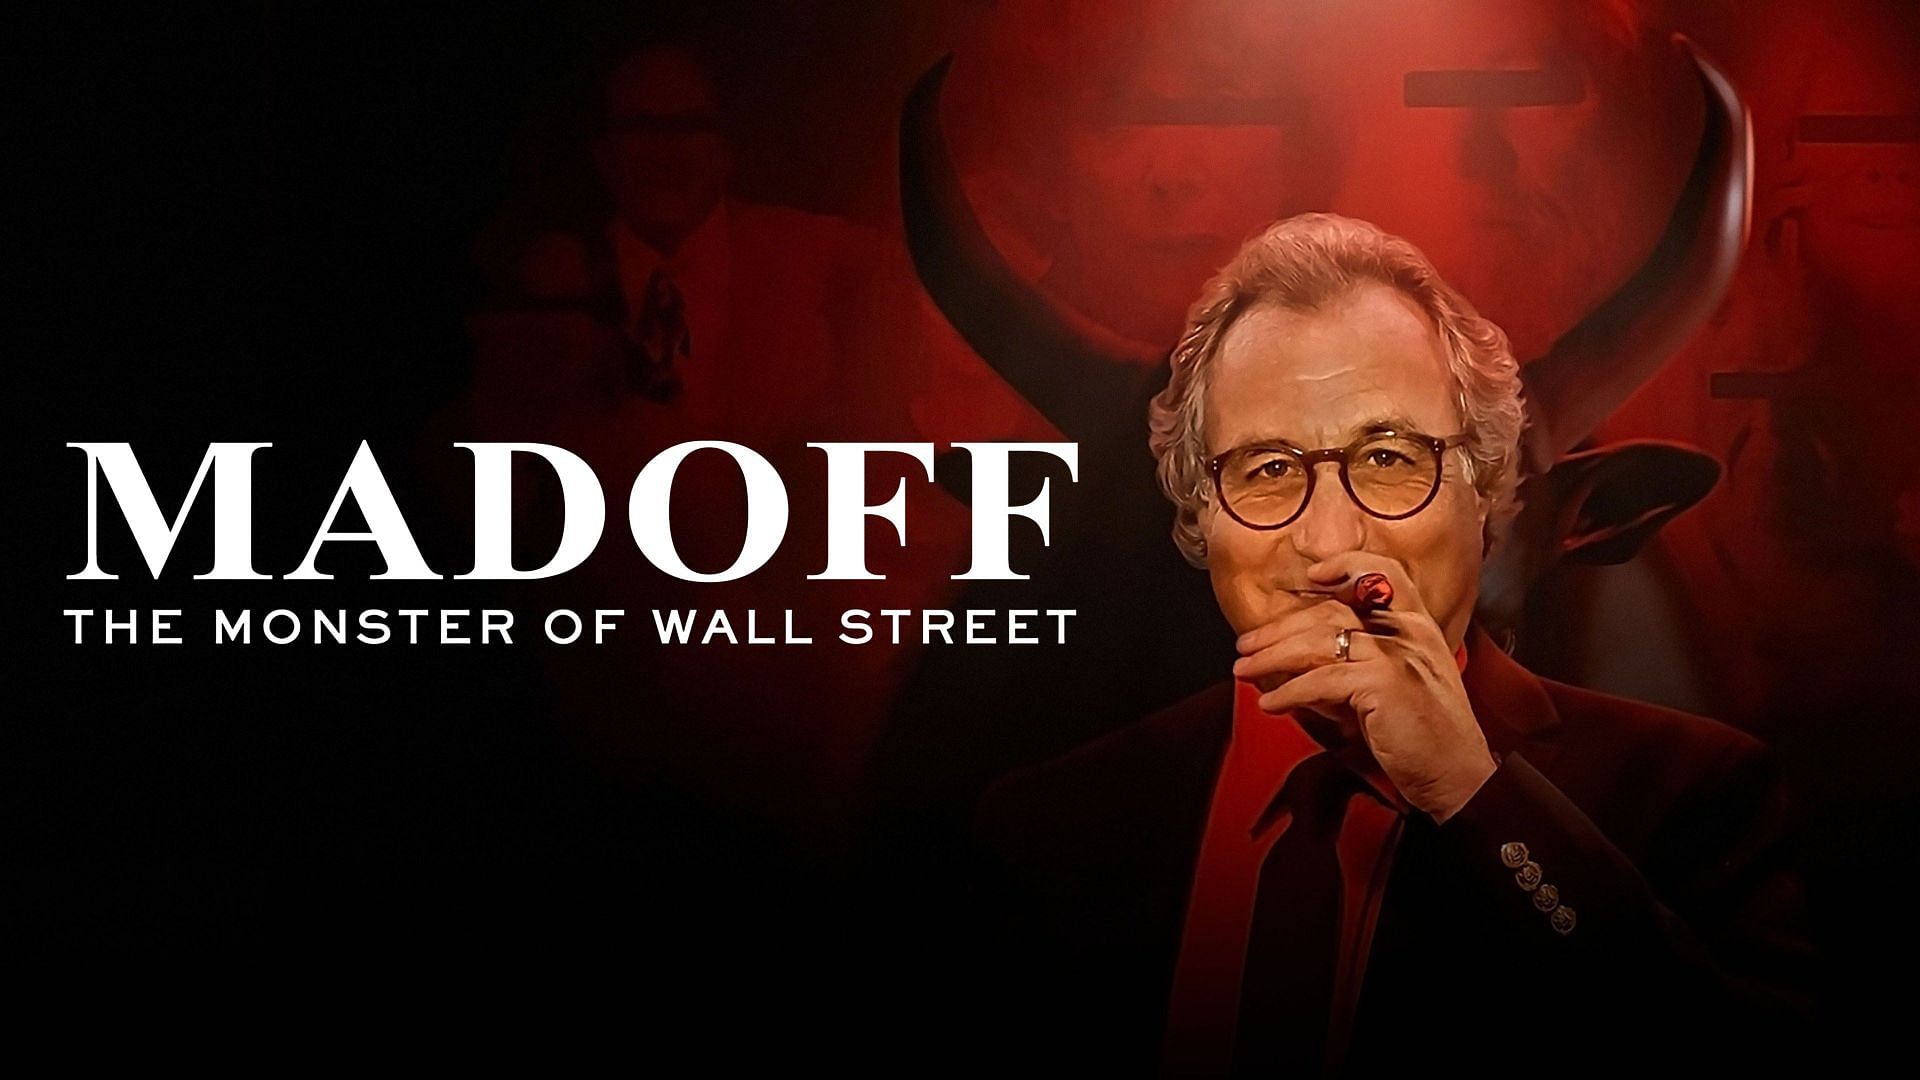 Madoff: The monster of Wall Street (Image via Netflix)